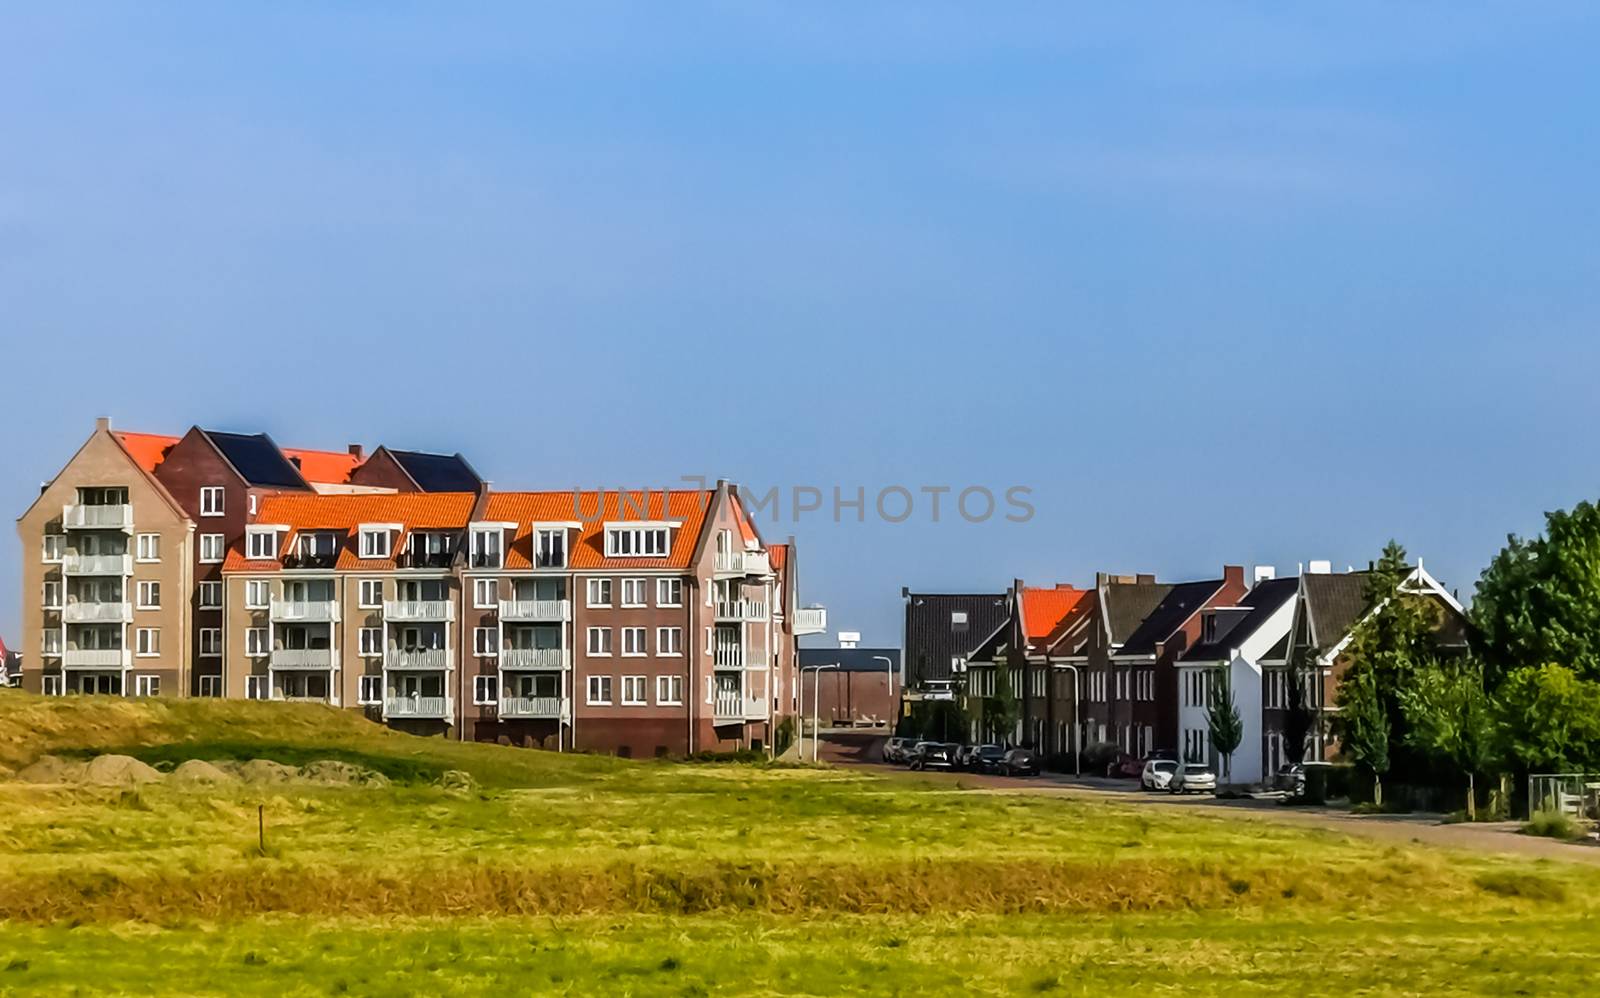 village landscape of sint Annaland, touristic town in zeeland, The Netherlands by charlottebleijenberg